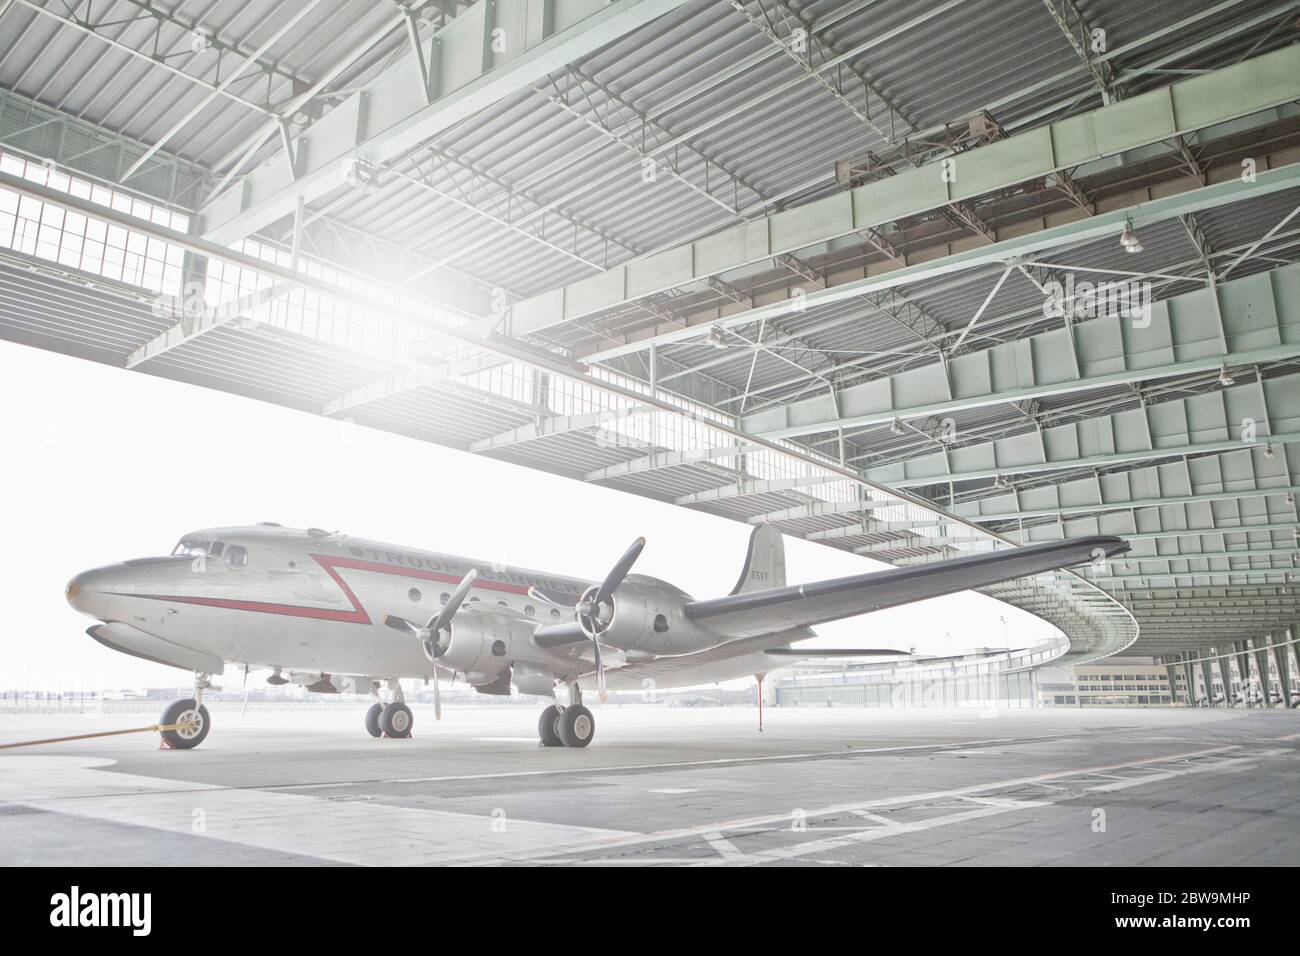 Germany, Berlin, Small airplane in hangar at Tempelhof Airport Stock Photo